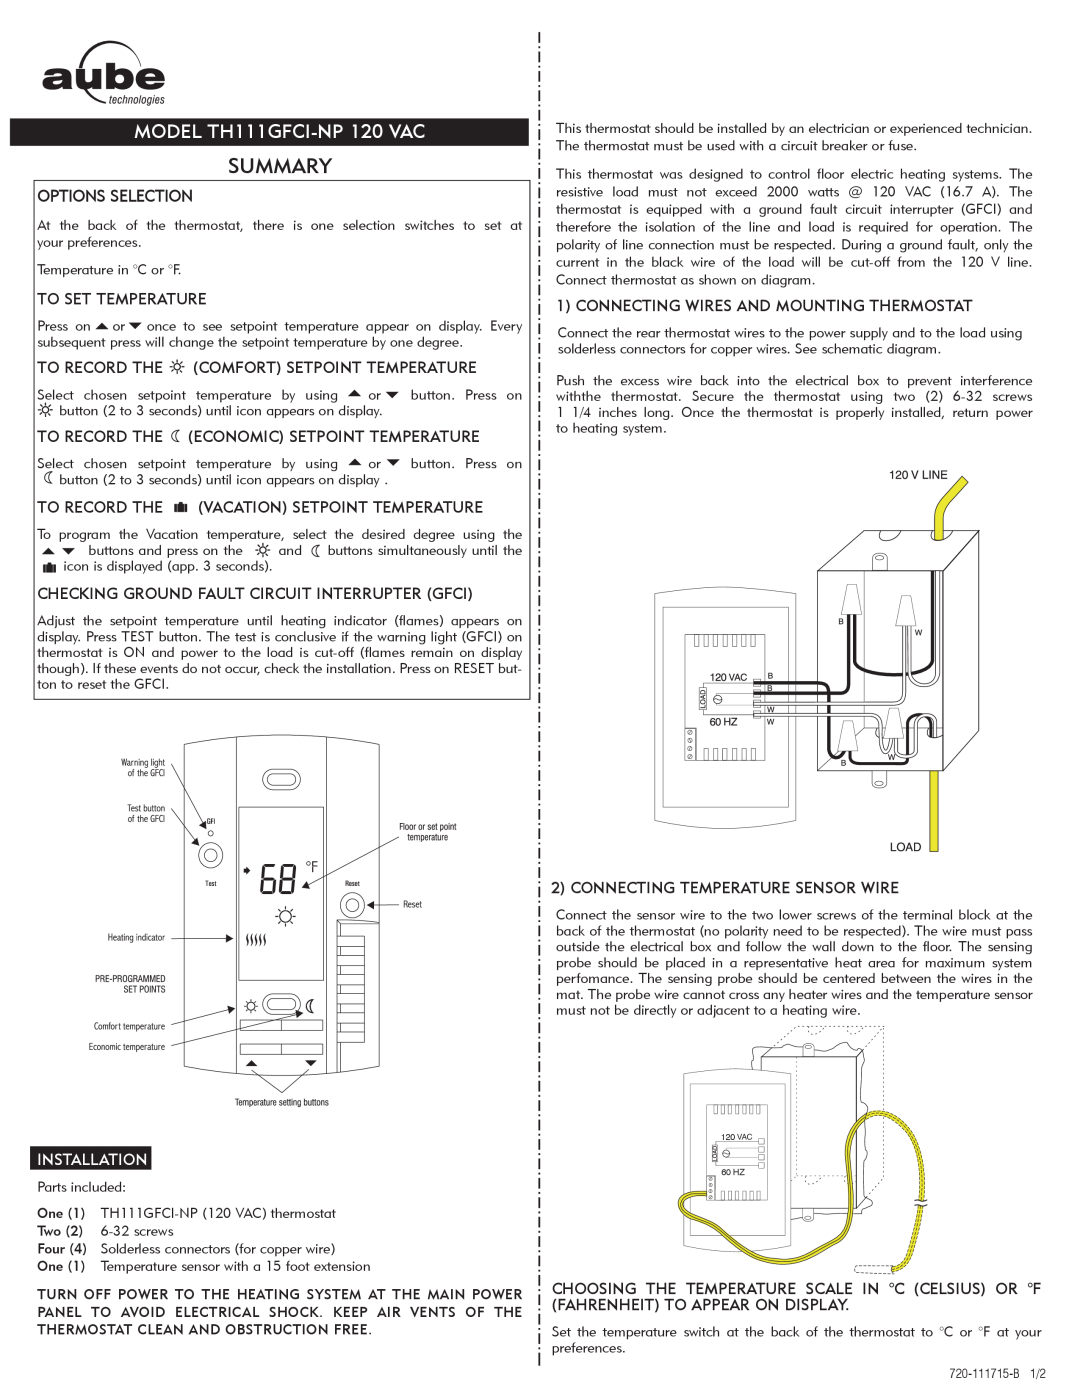 Aube Technologies manual Installation, Summary, MODEL TH111GFCI-NP 120 VAC, Options Selection 